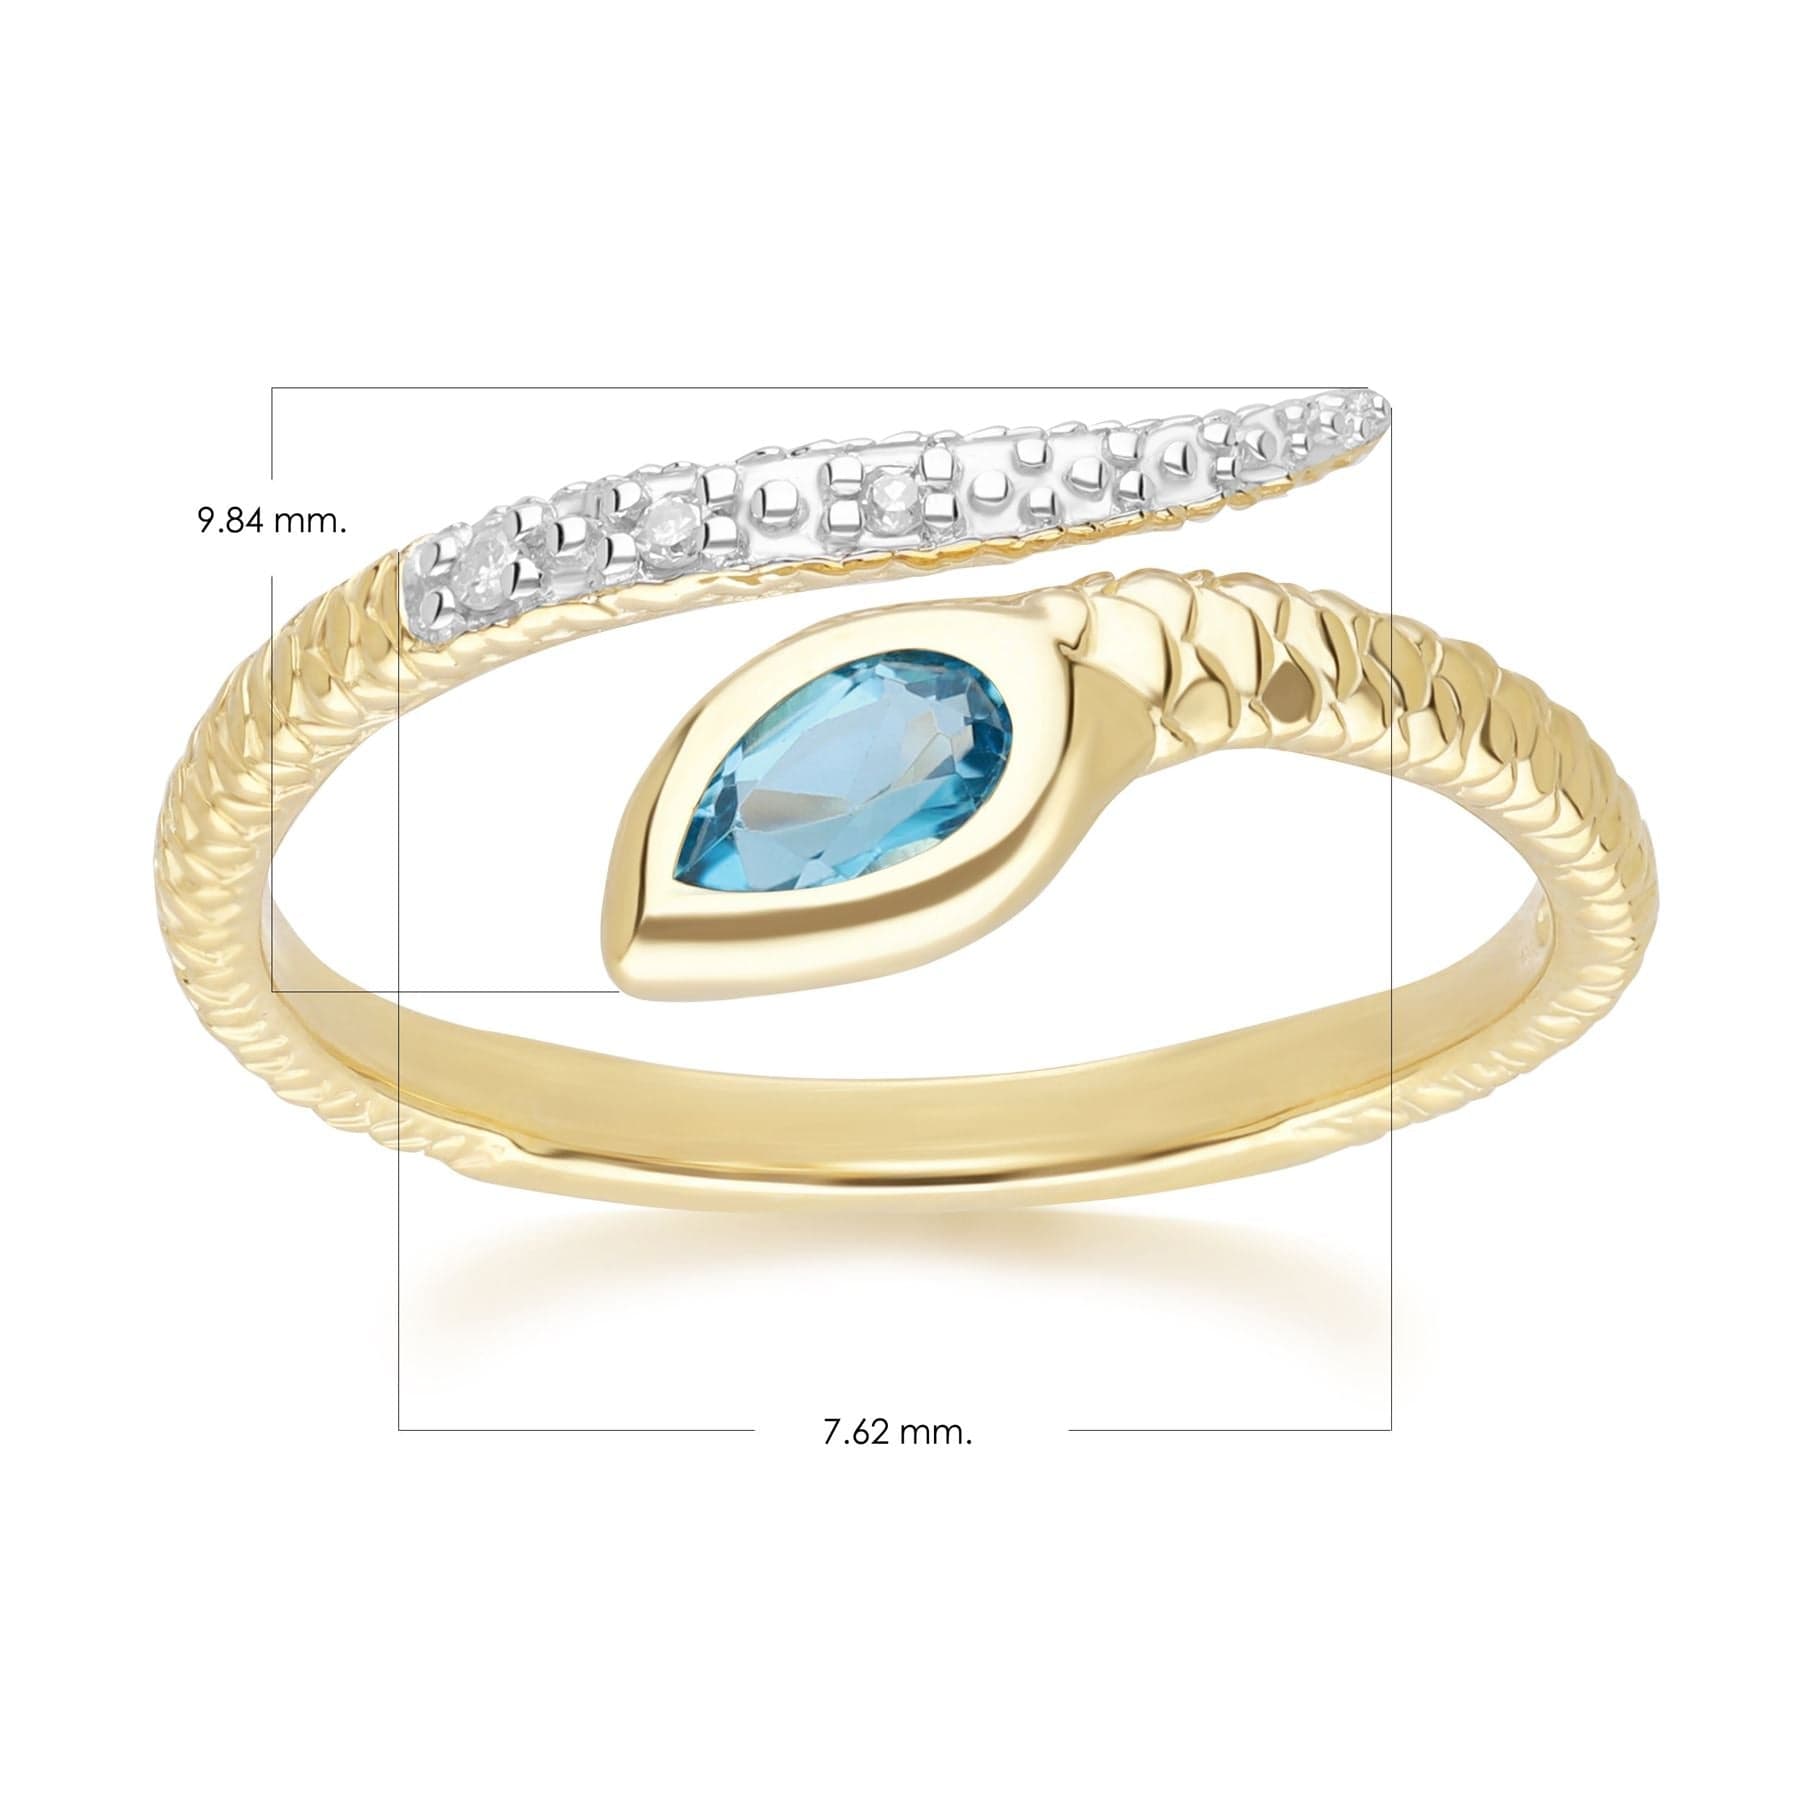 ECFEW™ London Blue Topaz & Diamond Snake Ring in 9ct Yellow Gold - Gemondo